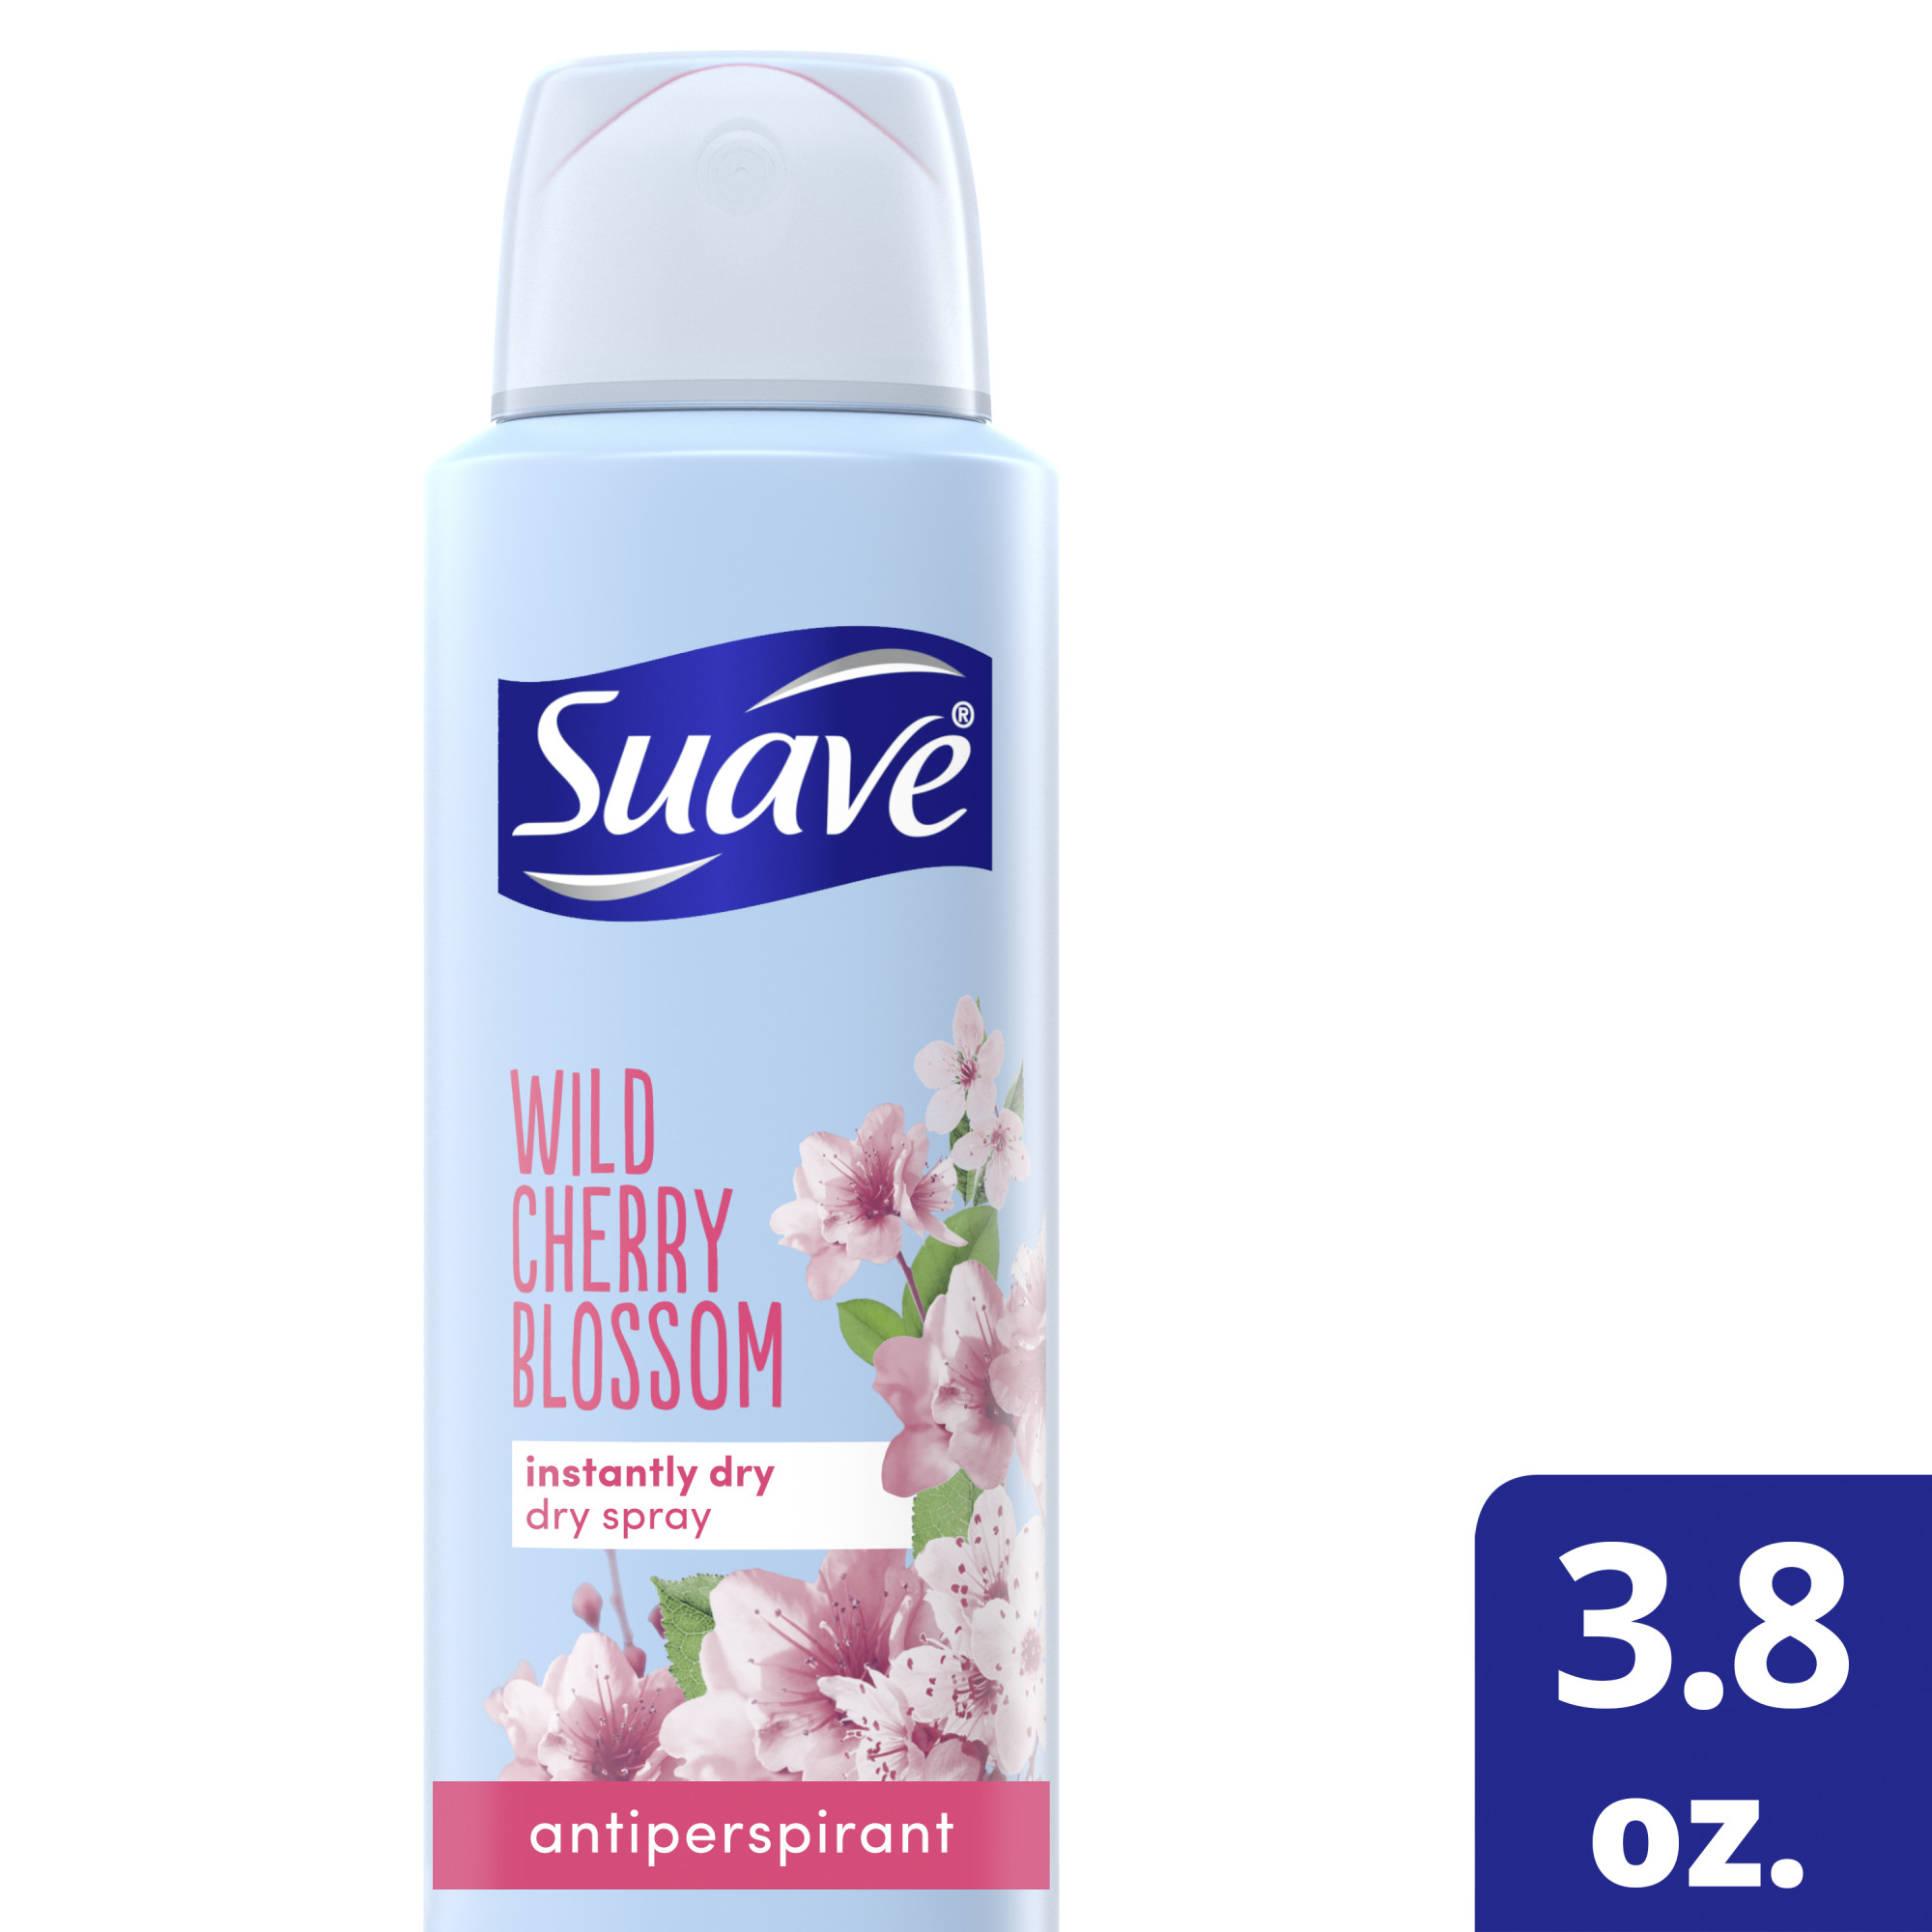 Suave Dry Spray Wild Cherry Blossom Antiperspirant Deodorant 3.8 Oz - image 1 of 9